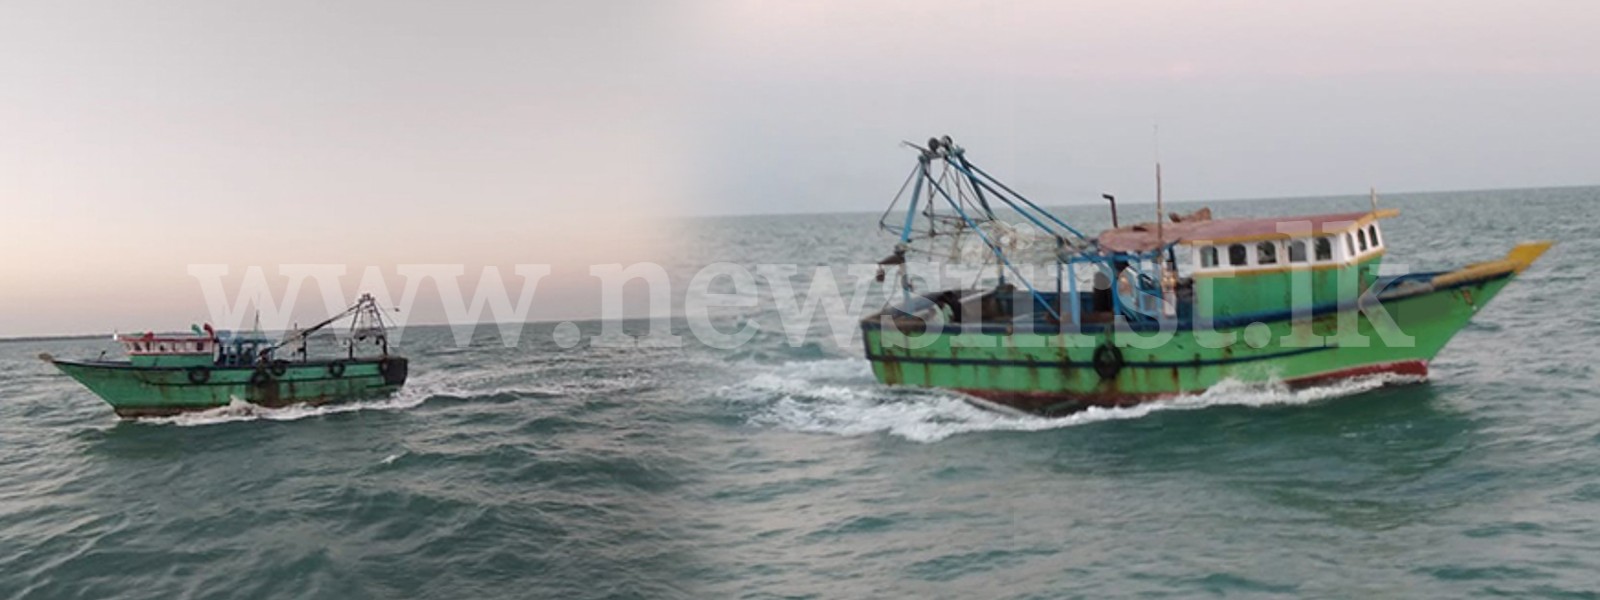 Tamil Nadu wants Modi to stop Sri Lanka boat auction